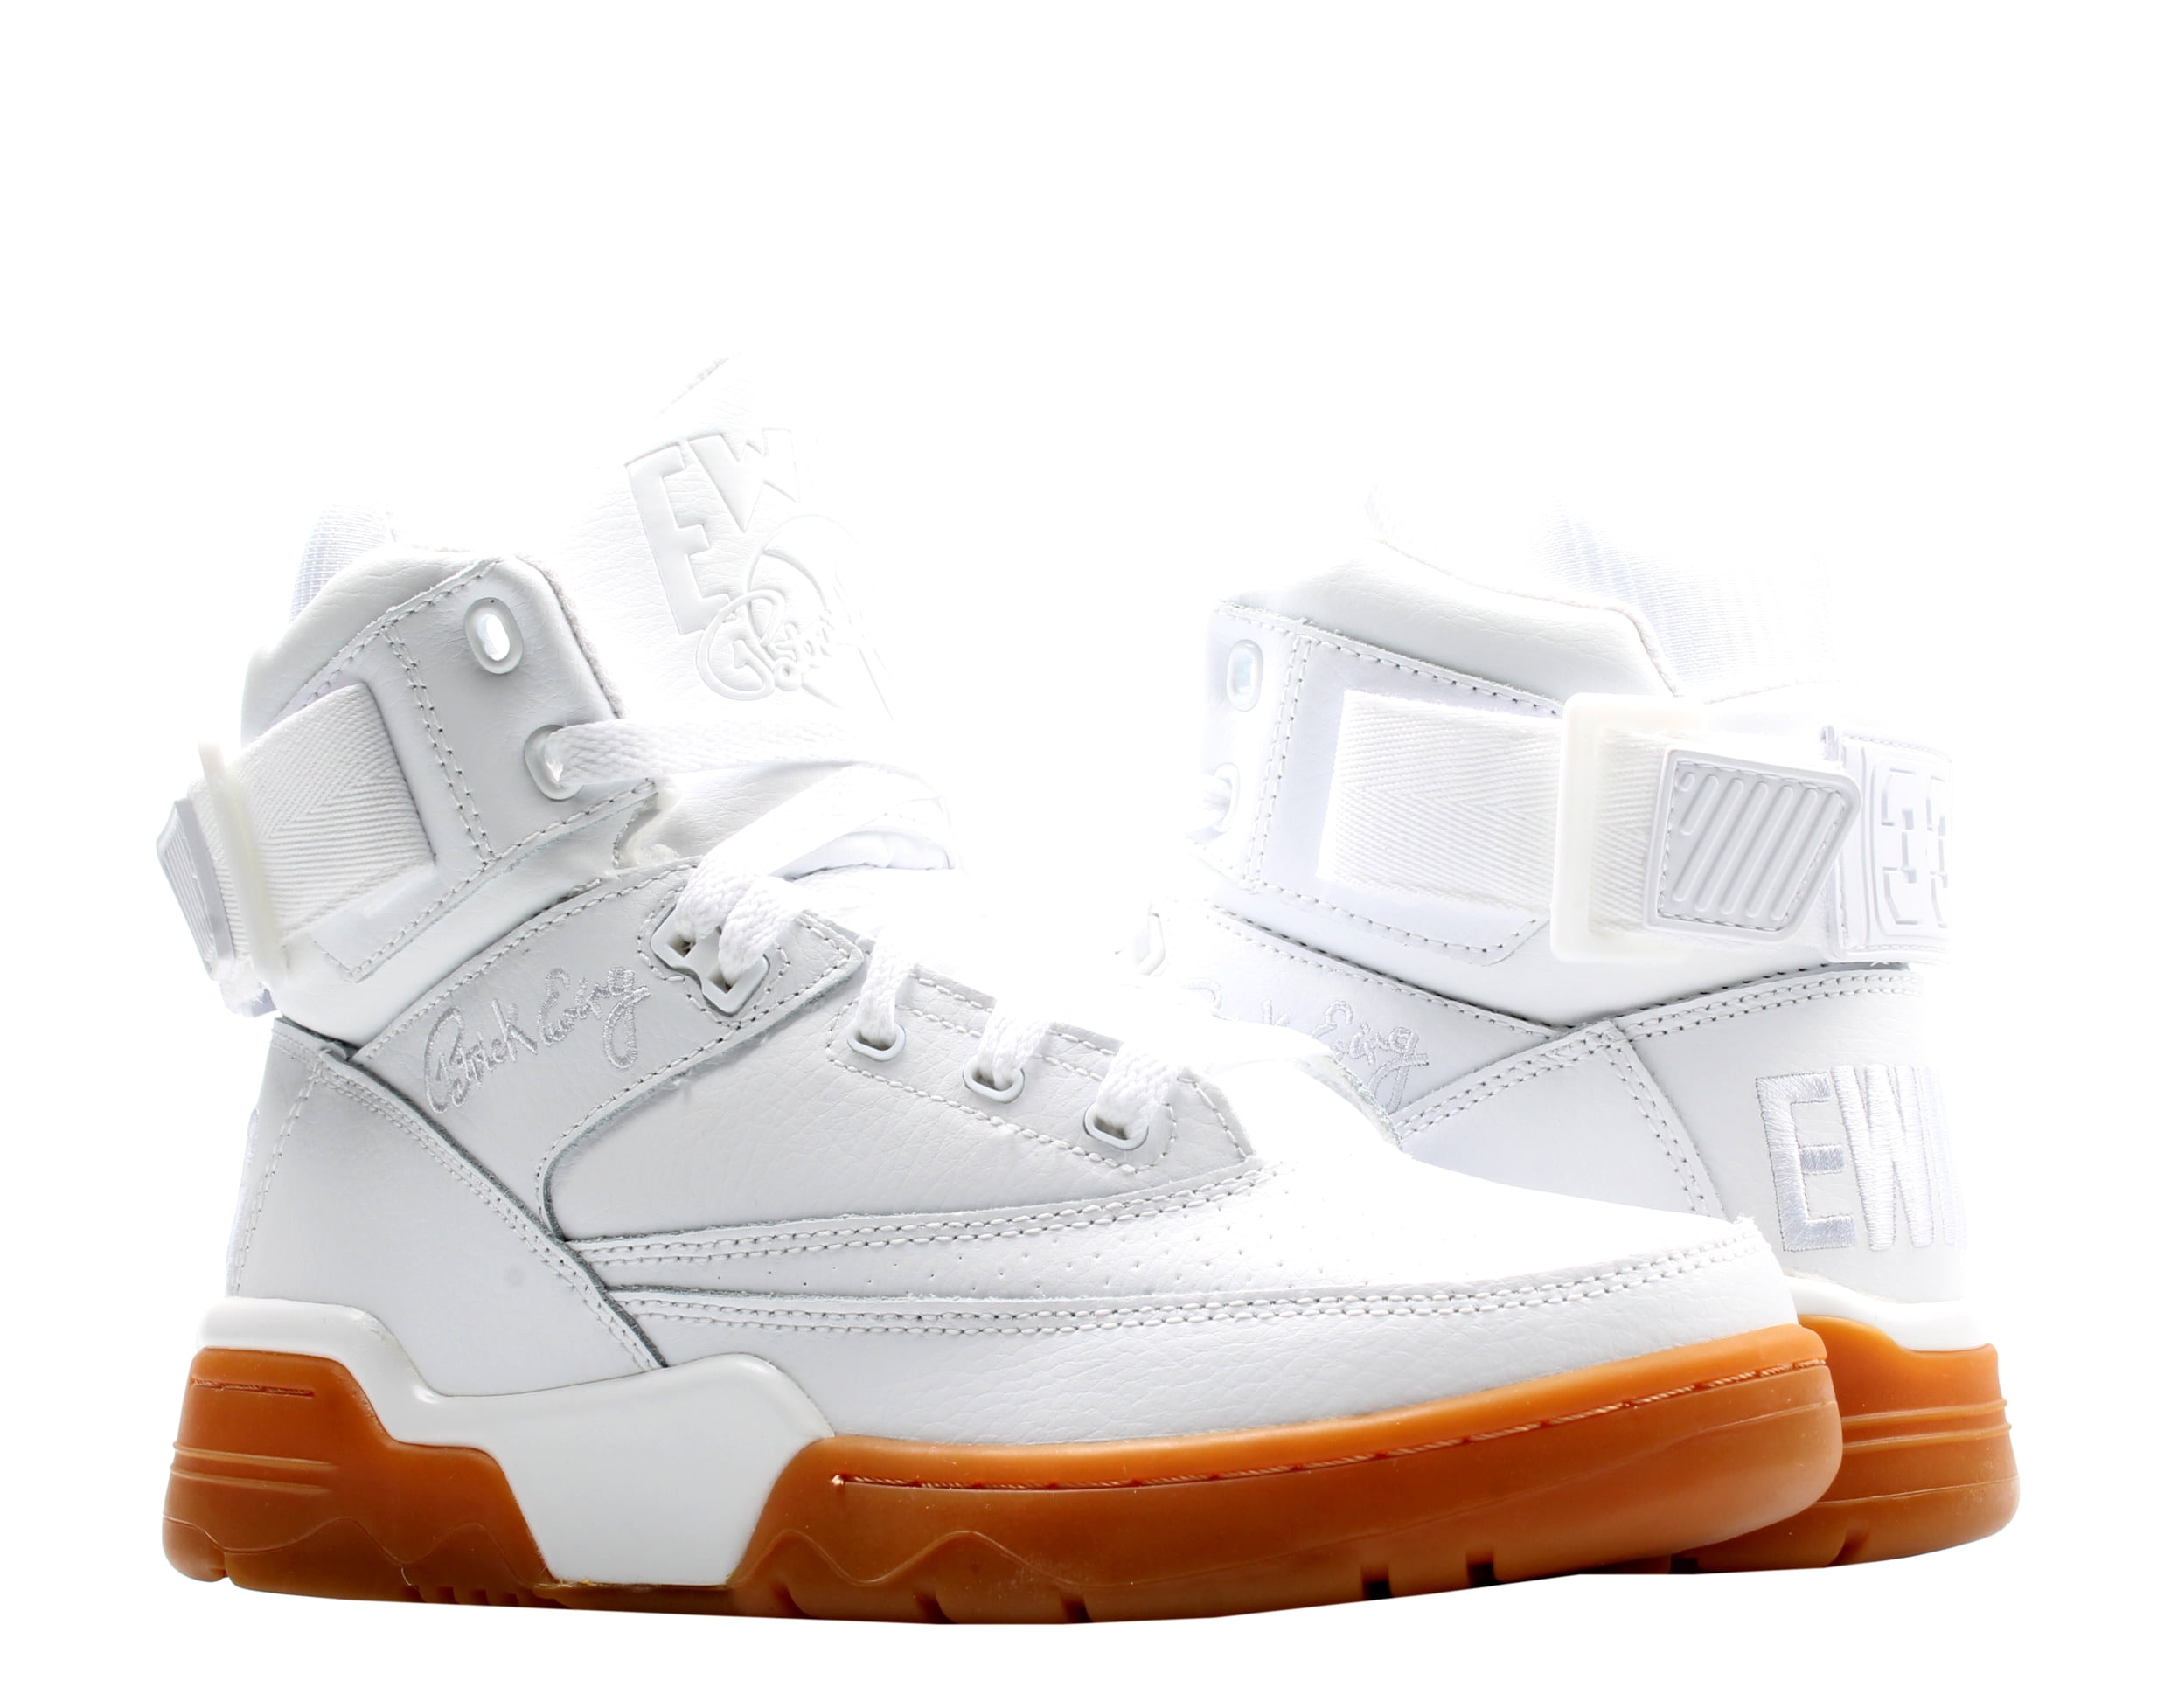 Patrick Ewing 33 Hi Men's Athletic Sneakers Basketball Shoes Knicks White  Orange